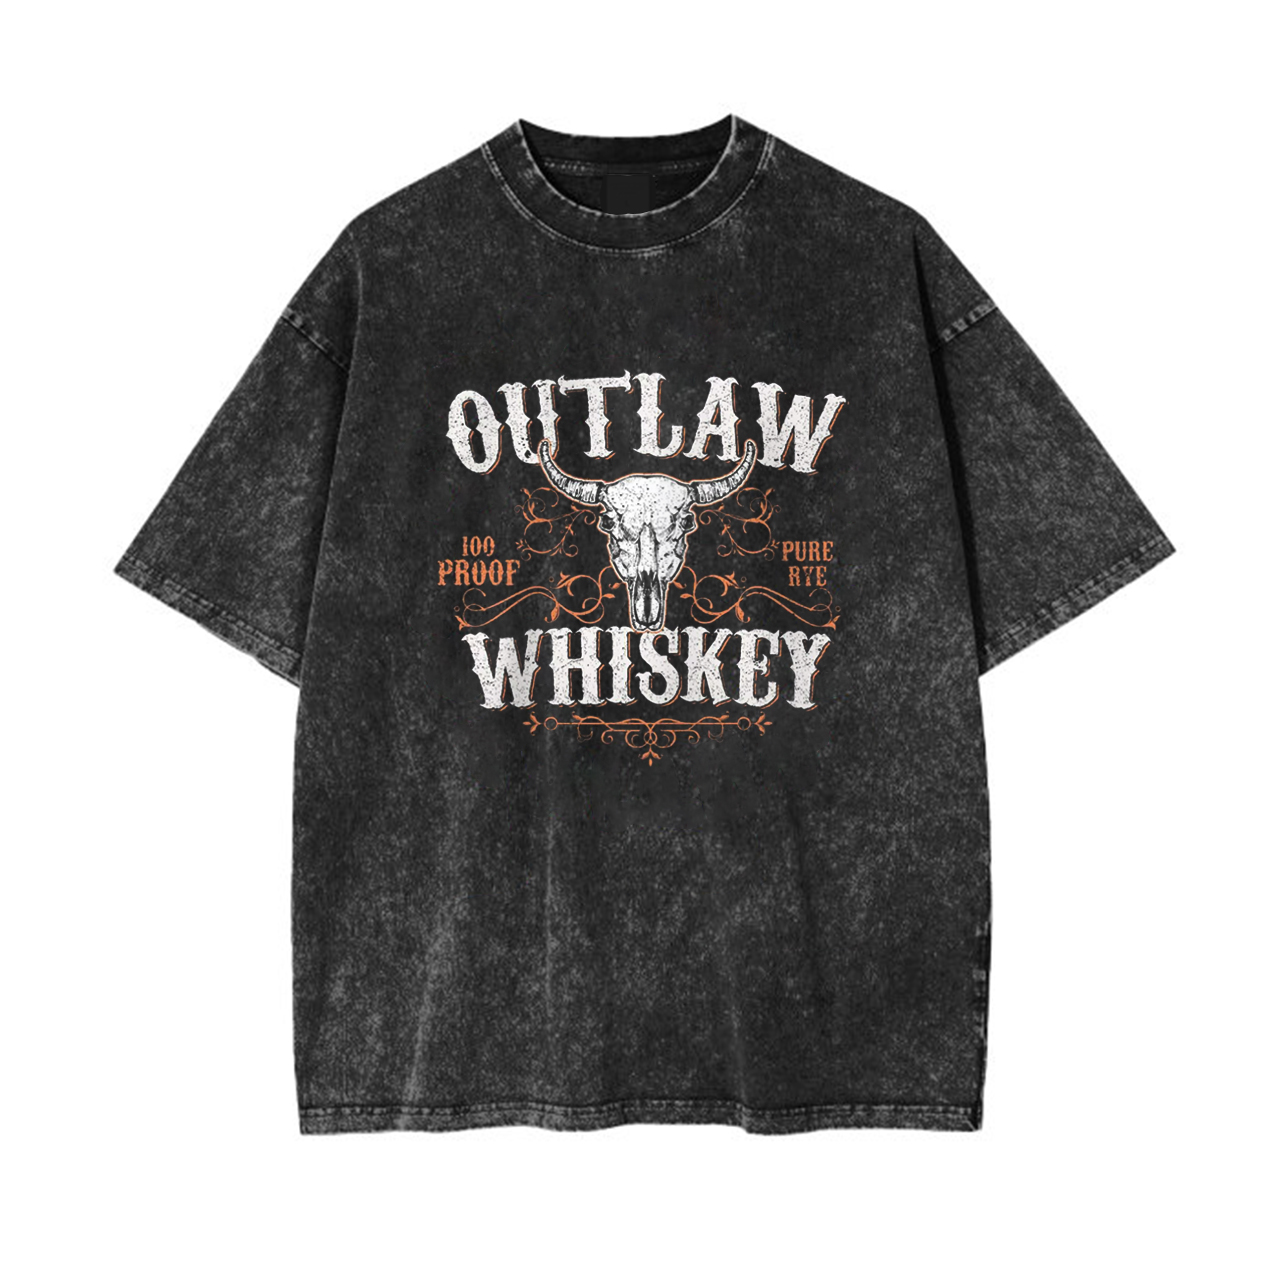 Outlaw Whiskey Garment-dye Tees